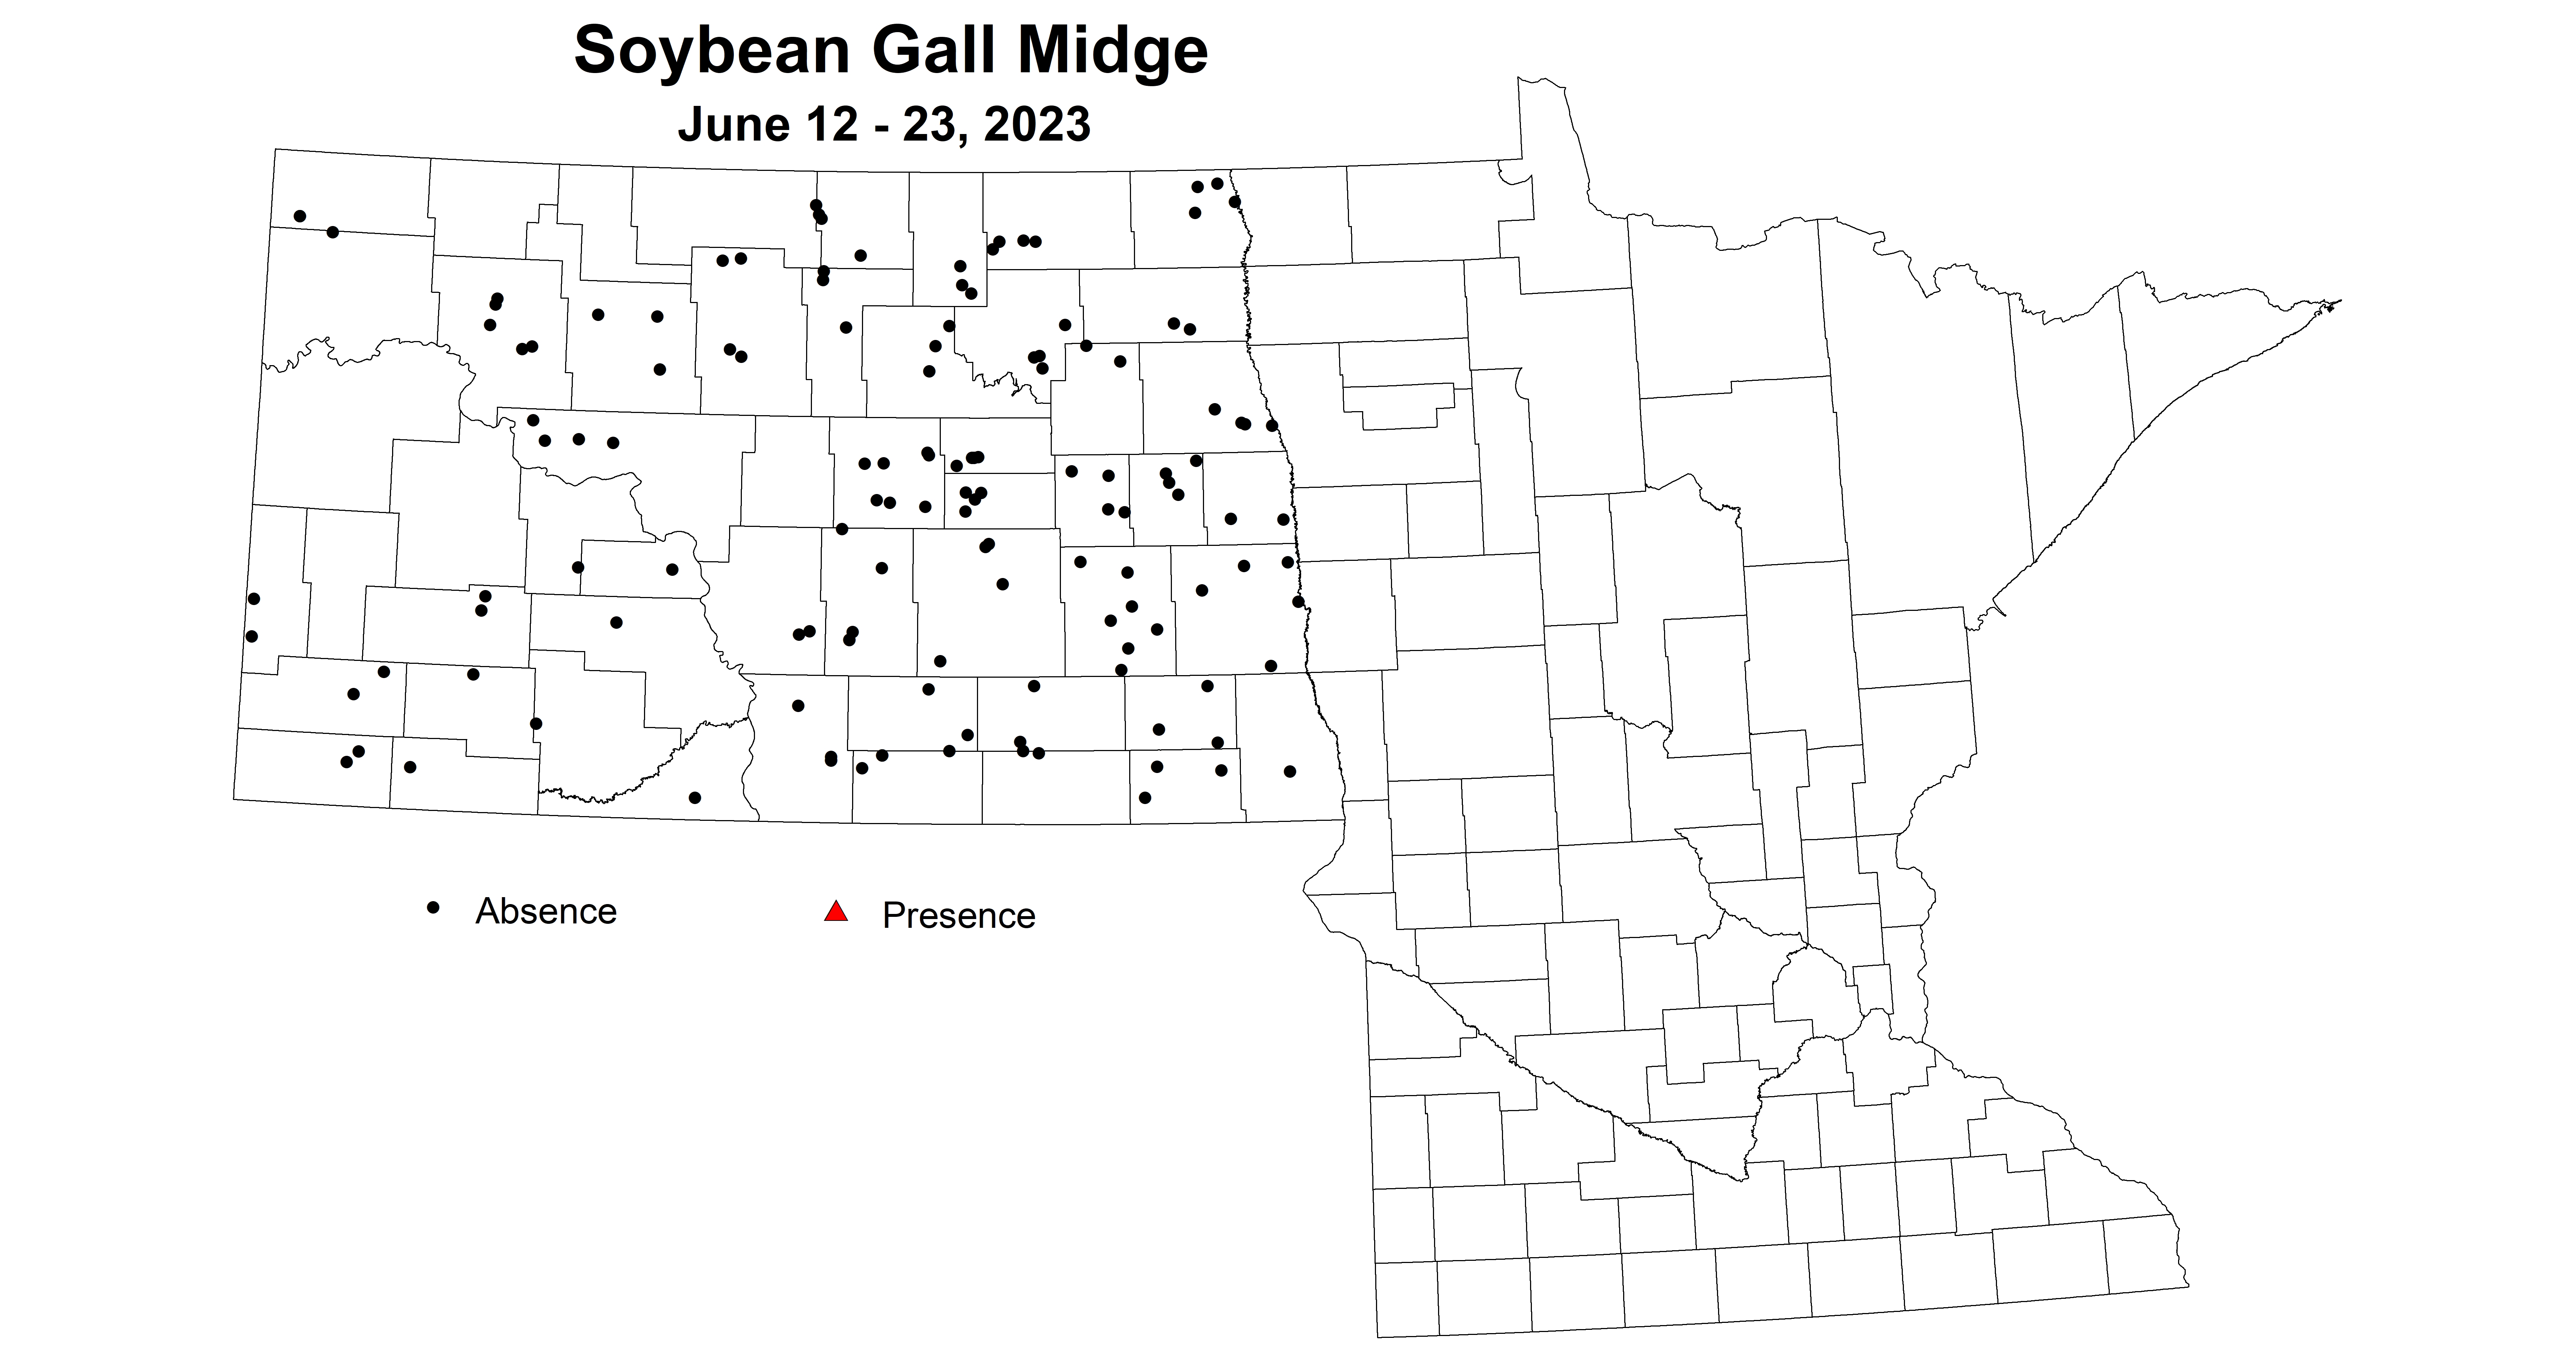 soybean gall midge June 12-23 2023 updated